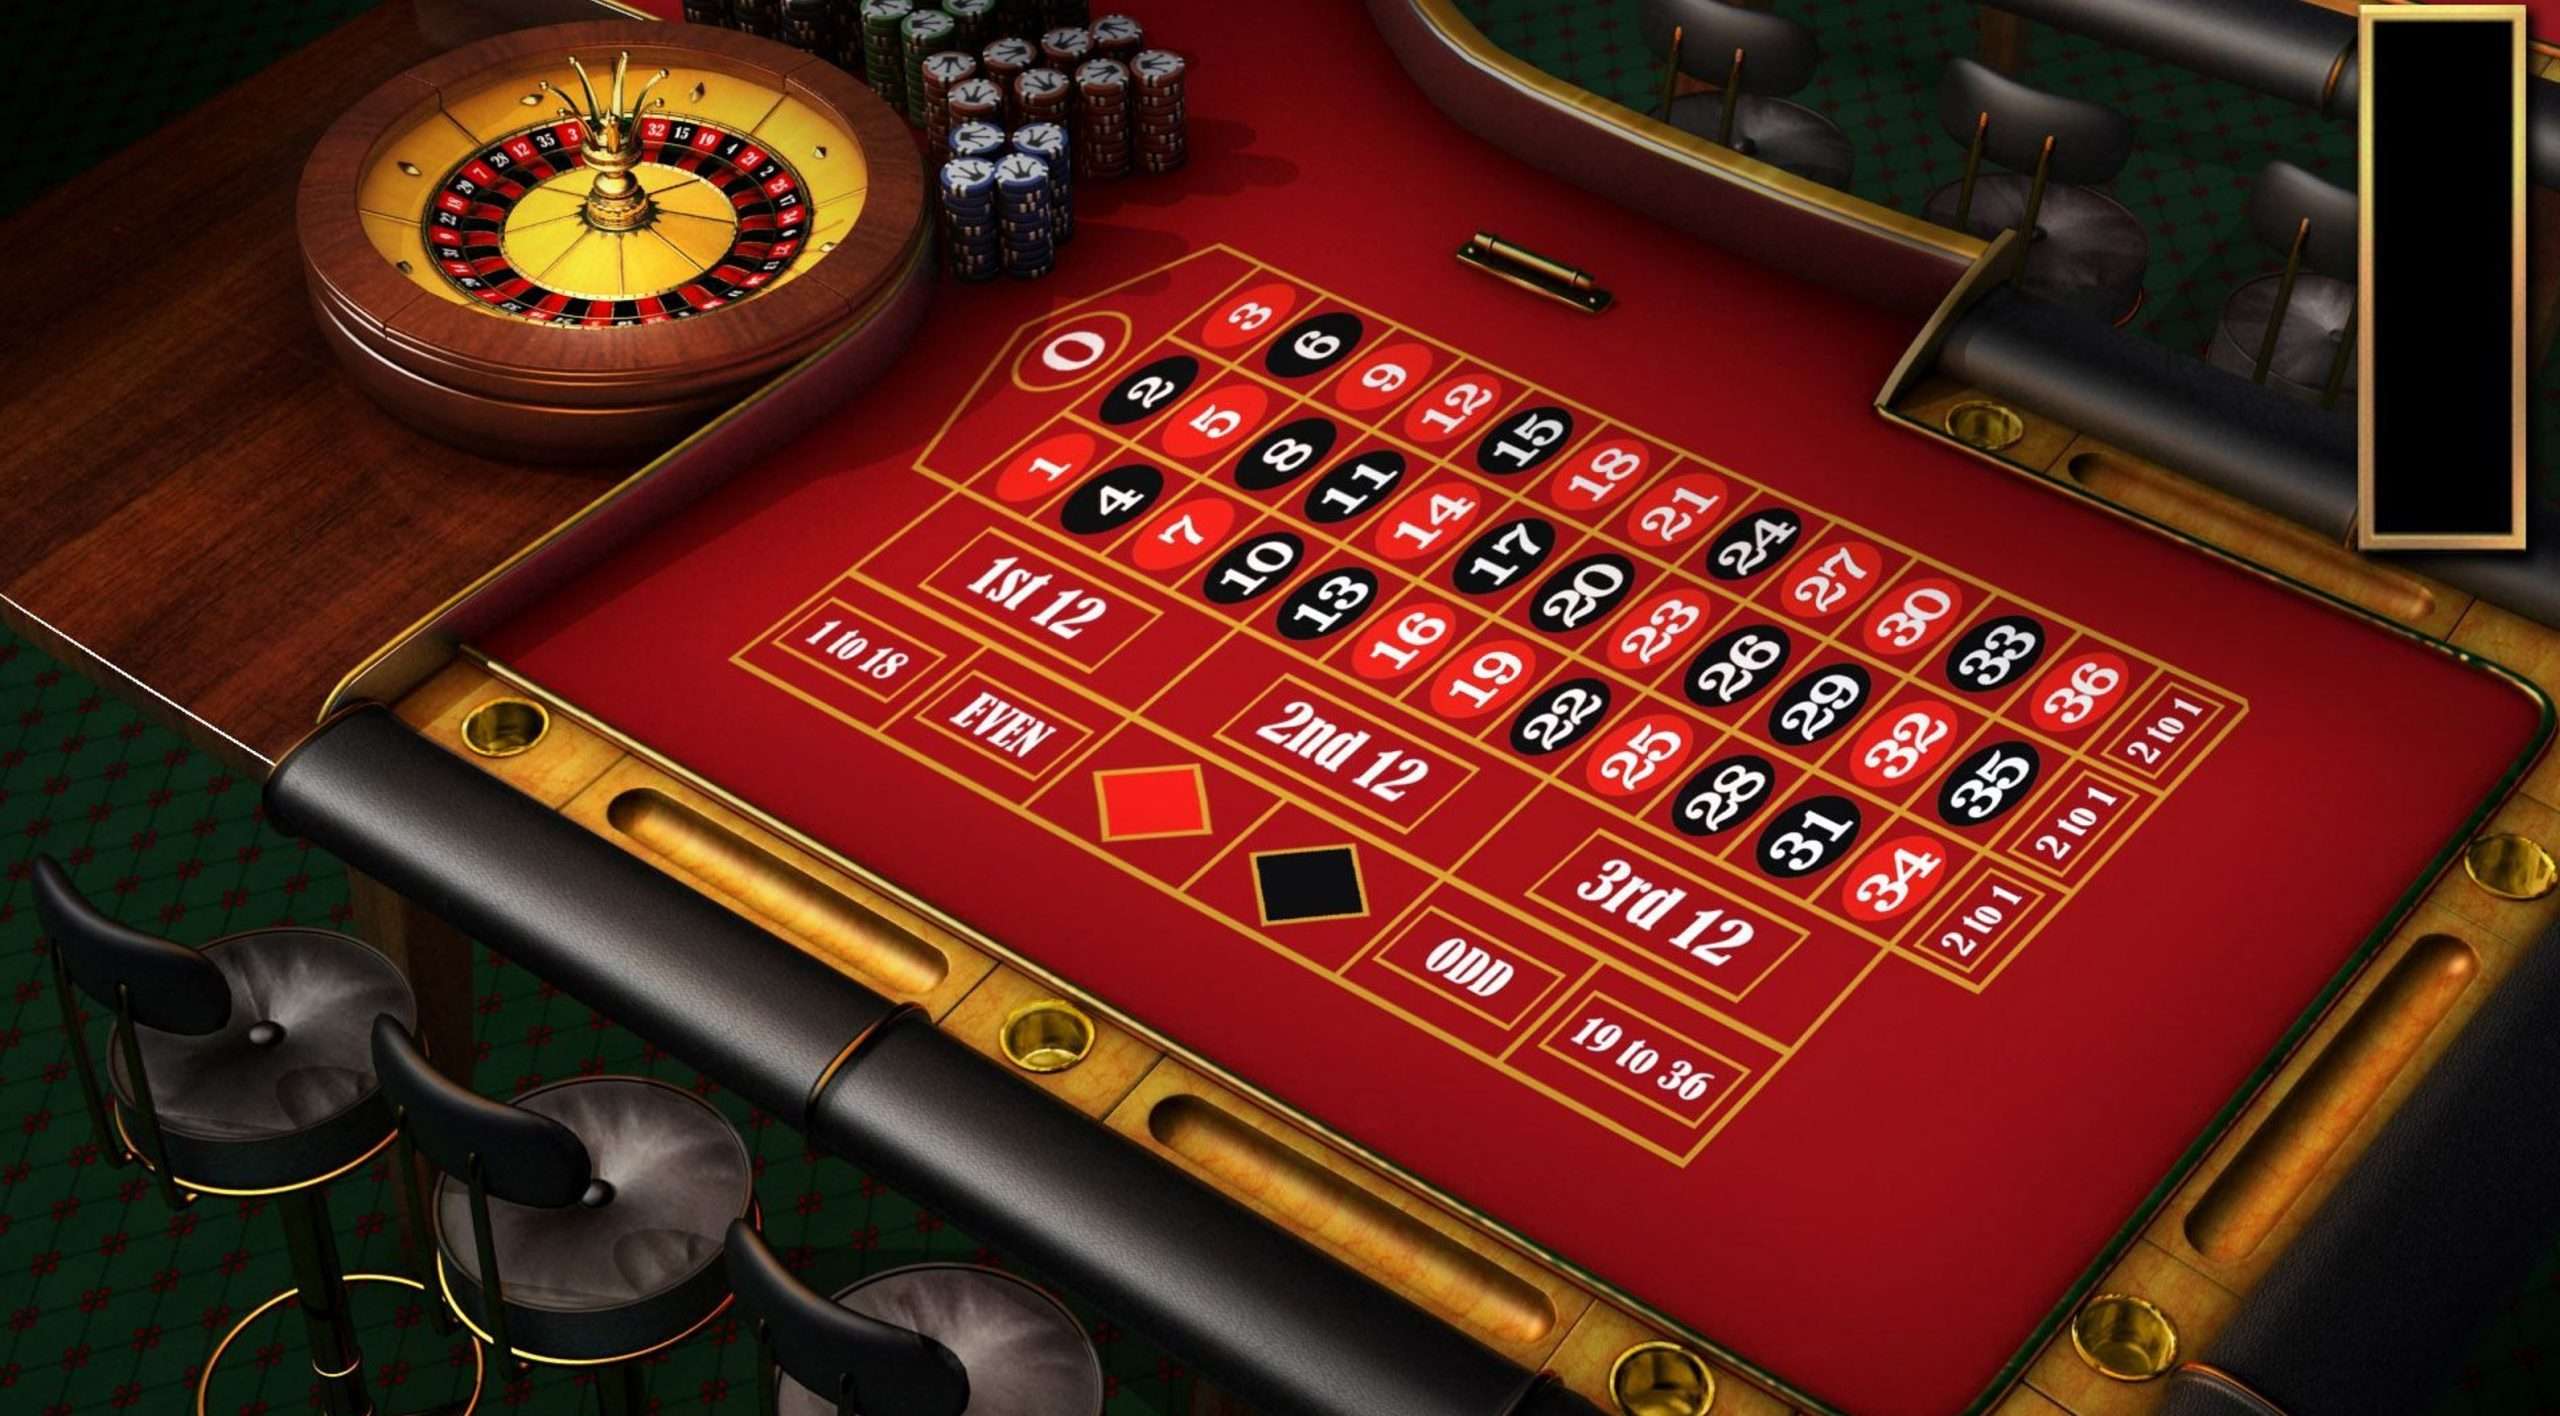 Does Trump Las Vegas Have A Casino